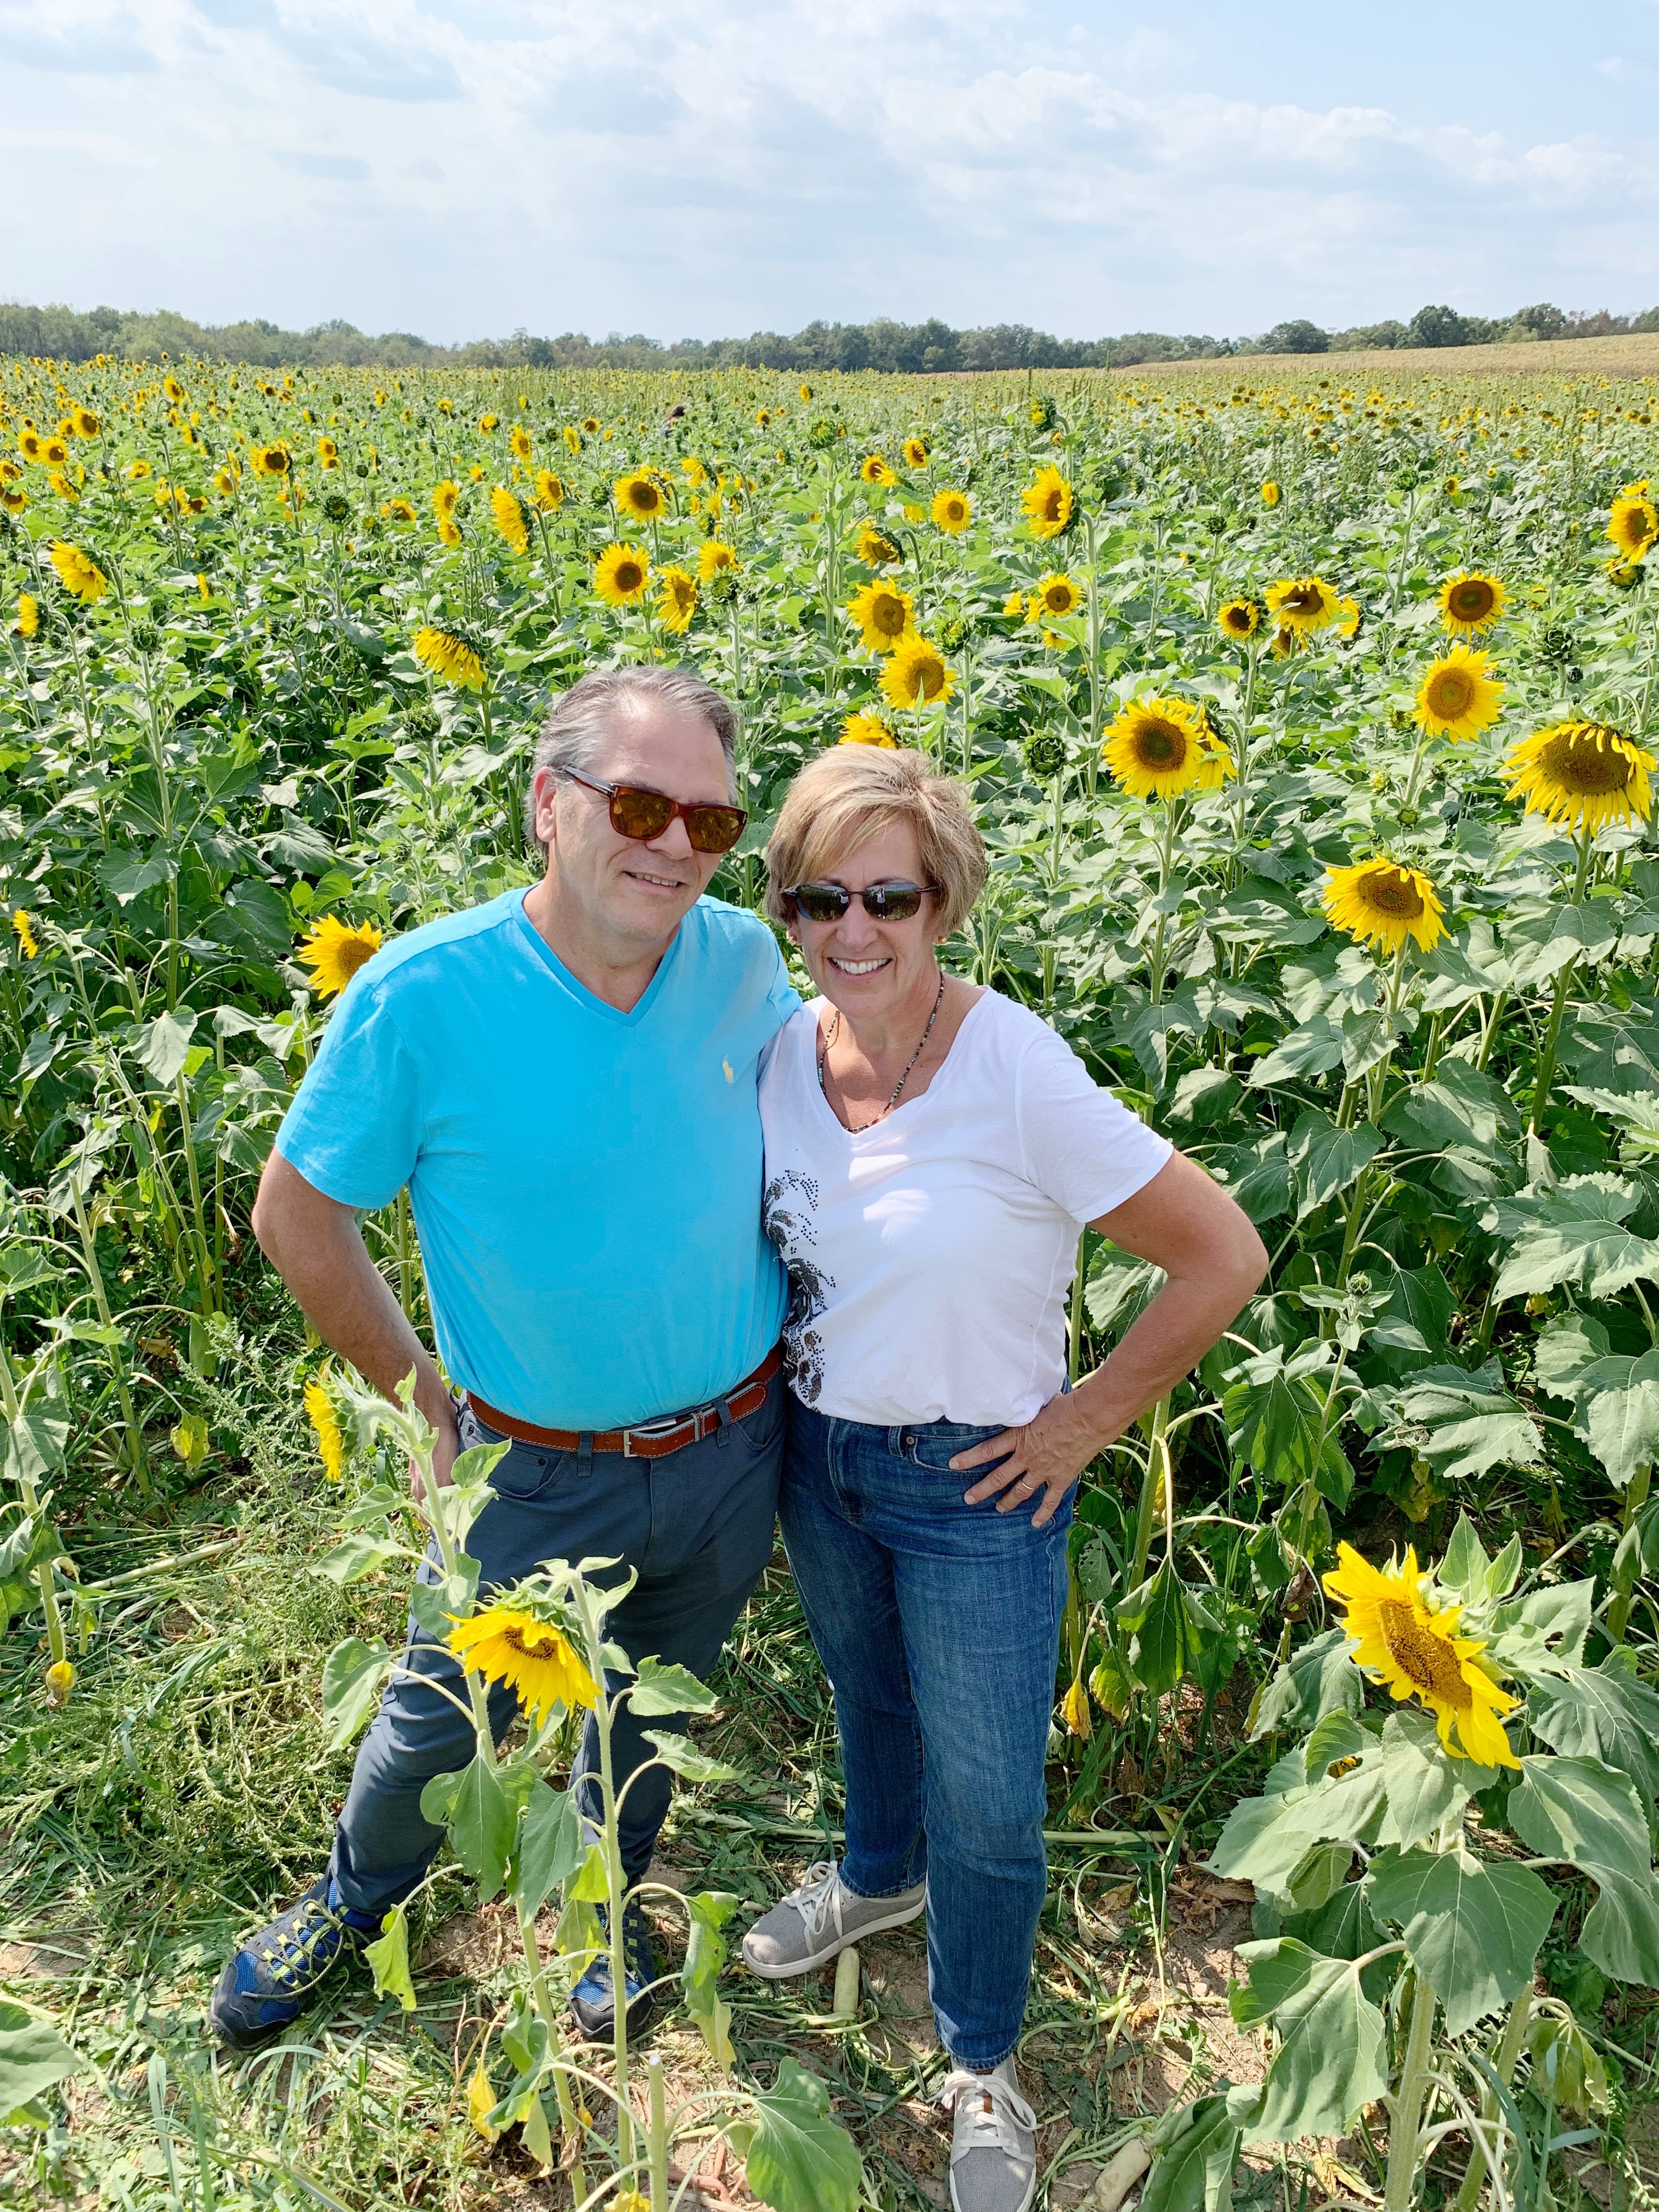 Couple in a sunflower field